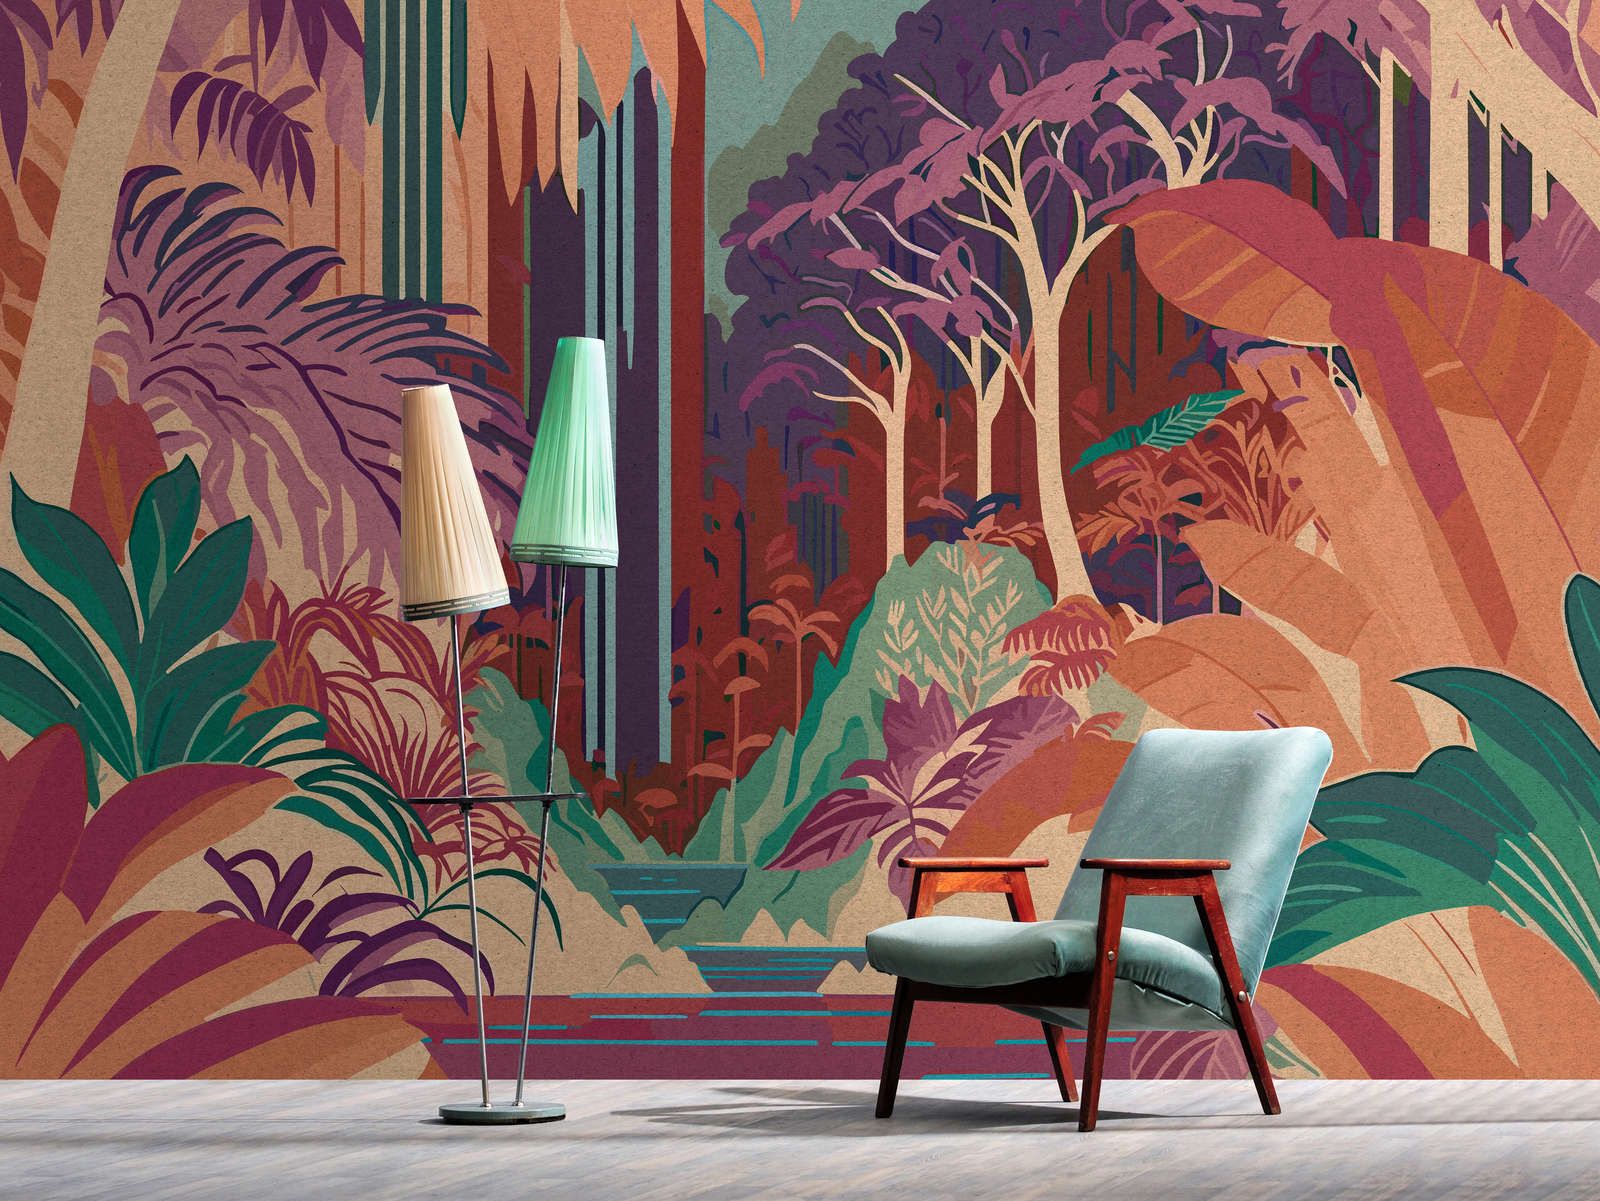             Photo wallpaper »rhea« - Abstract jungle motif with kraft paper texture - Matt, smooth non-woven fabric
        